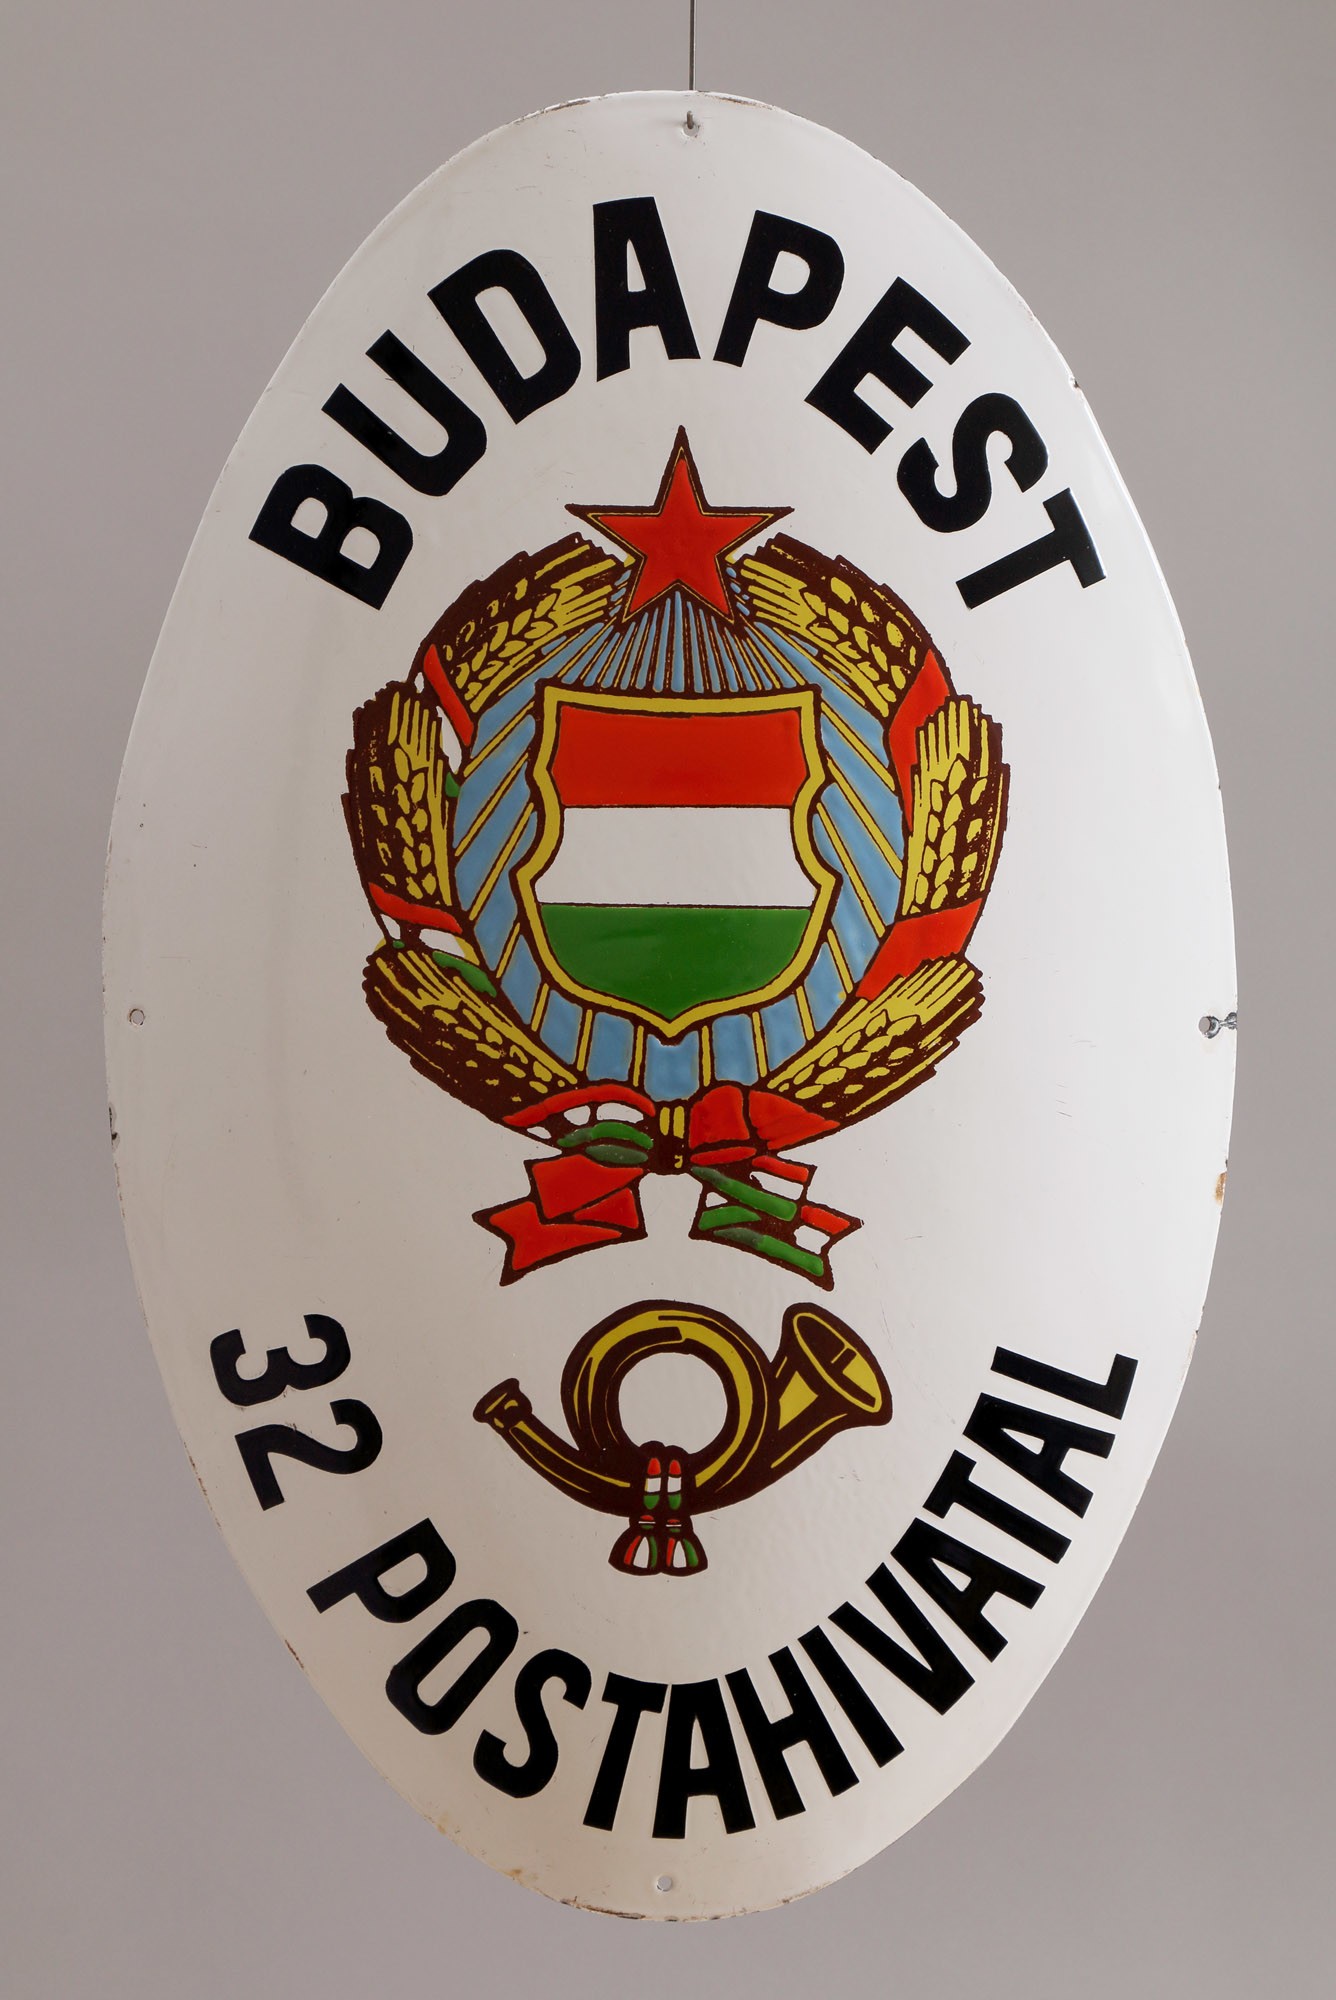 Címertábla "BUDAPEST 32 POSTAHIVATAL" (Postamúzeum CC BY-NC-SA)